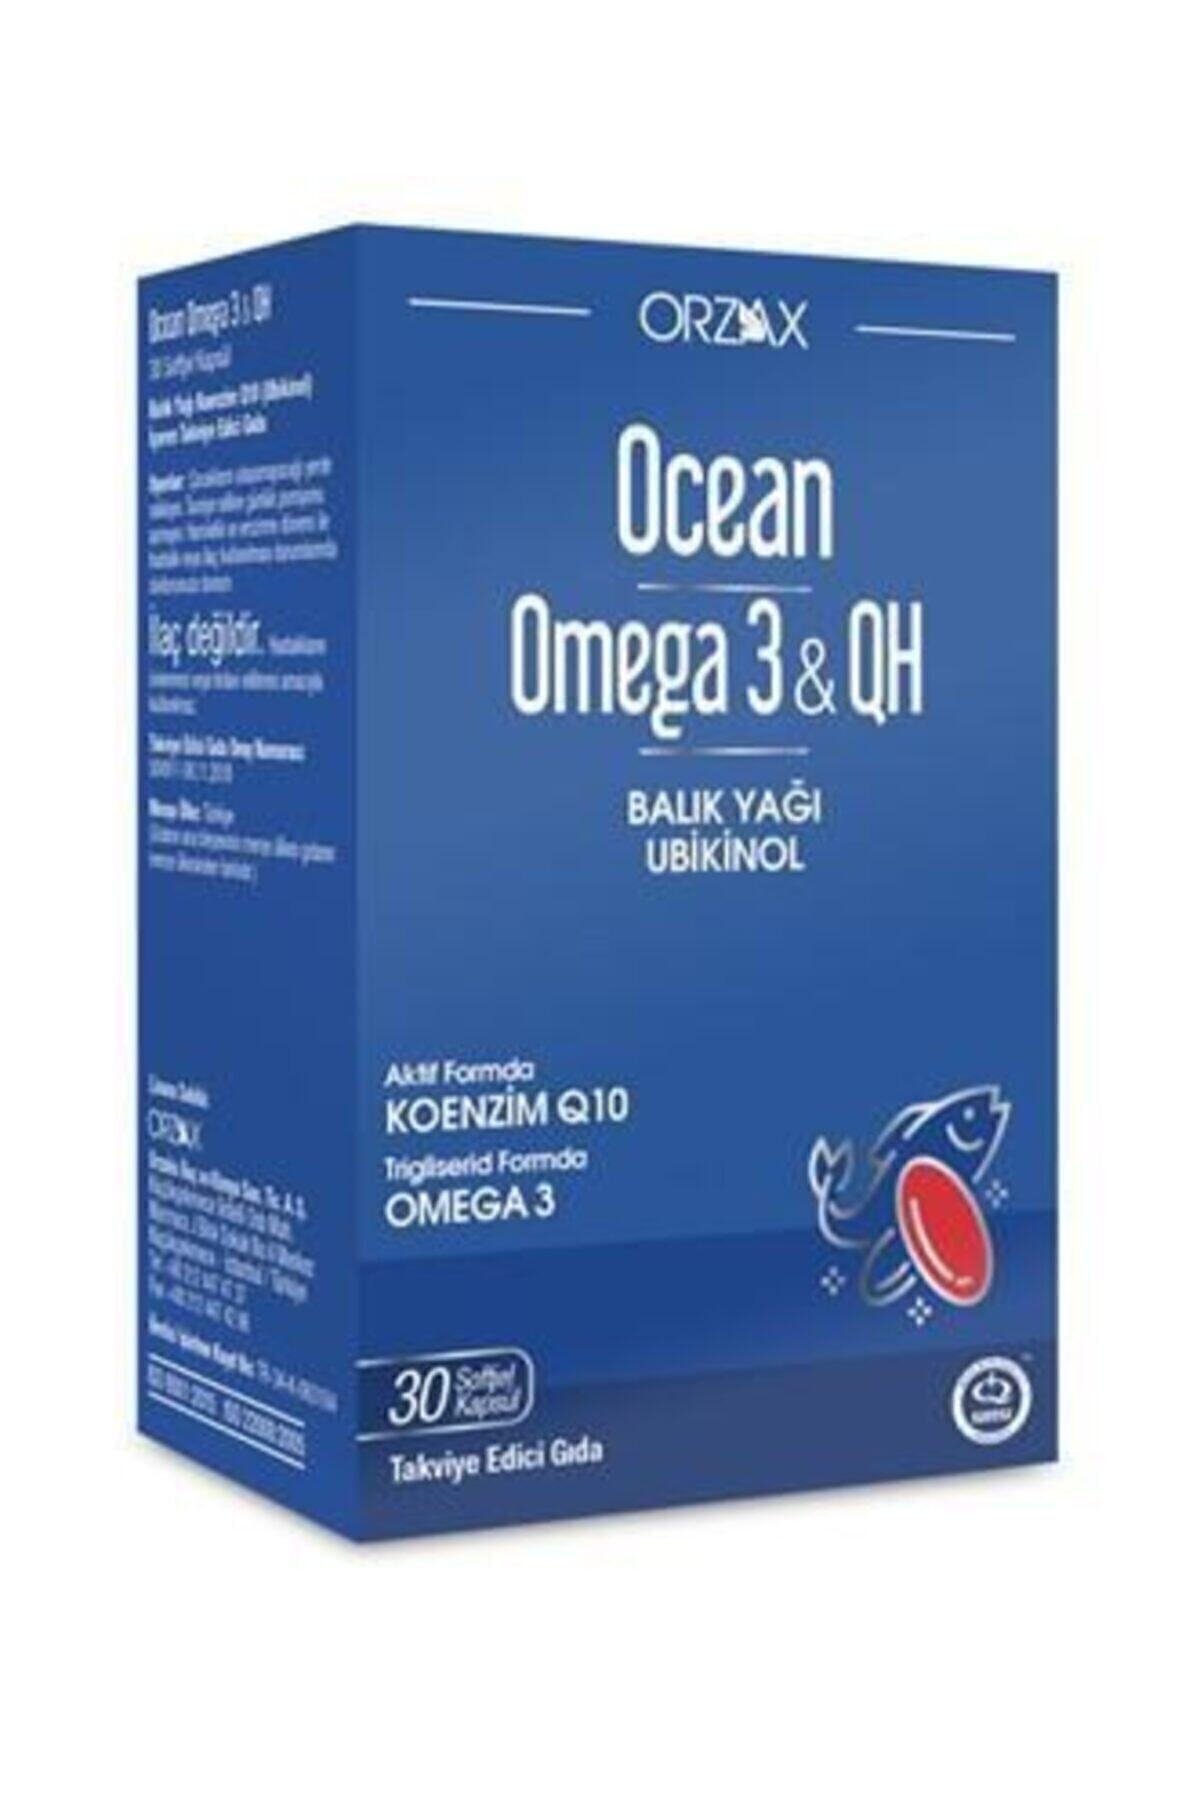 Omega 3 & Qh 30 Yumusak Kapsul